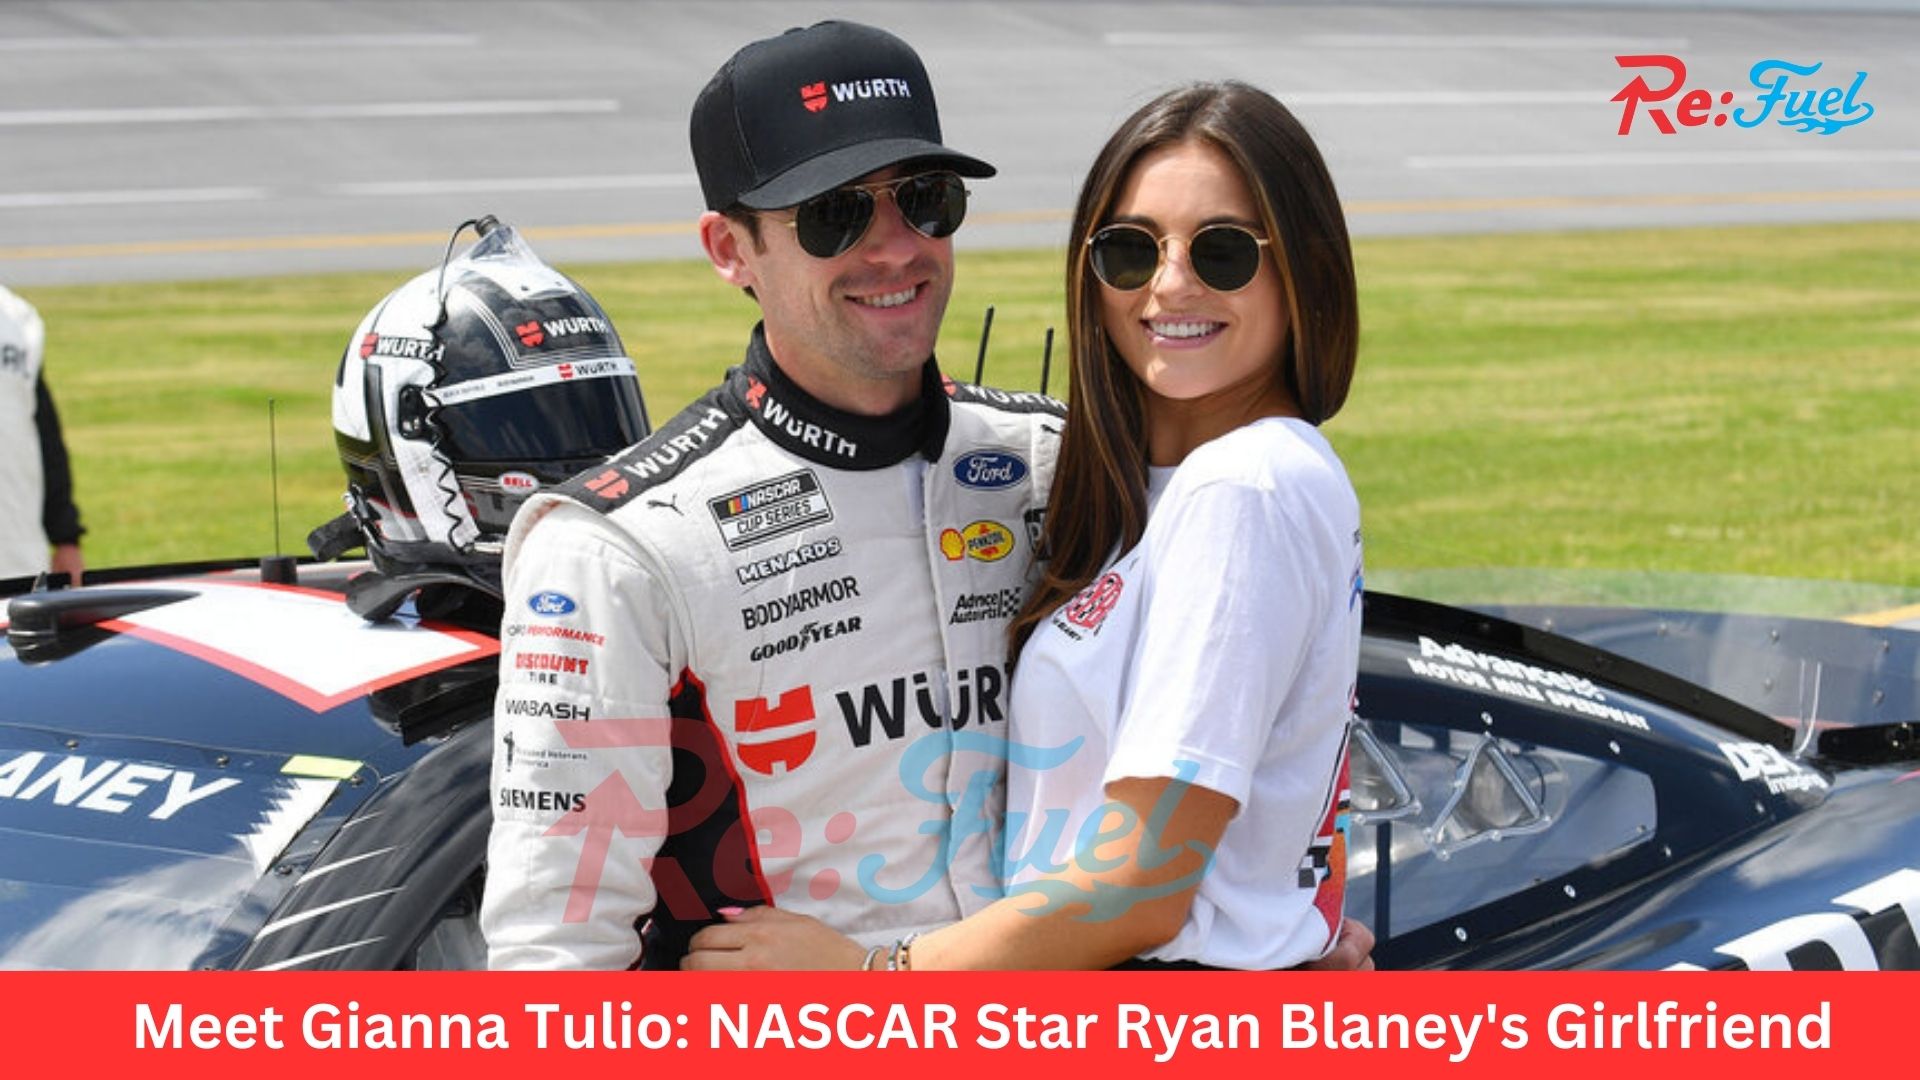 Meet Gianna Tulio: NASCAR Star Ryan Blaney's Girlfriend